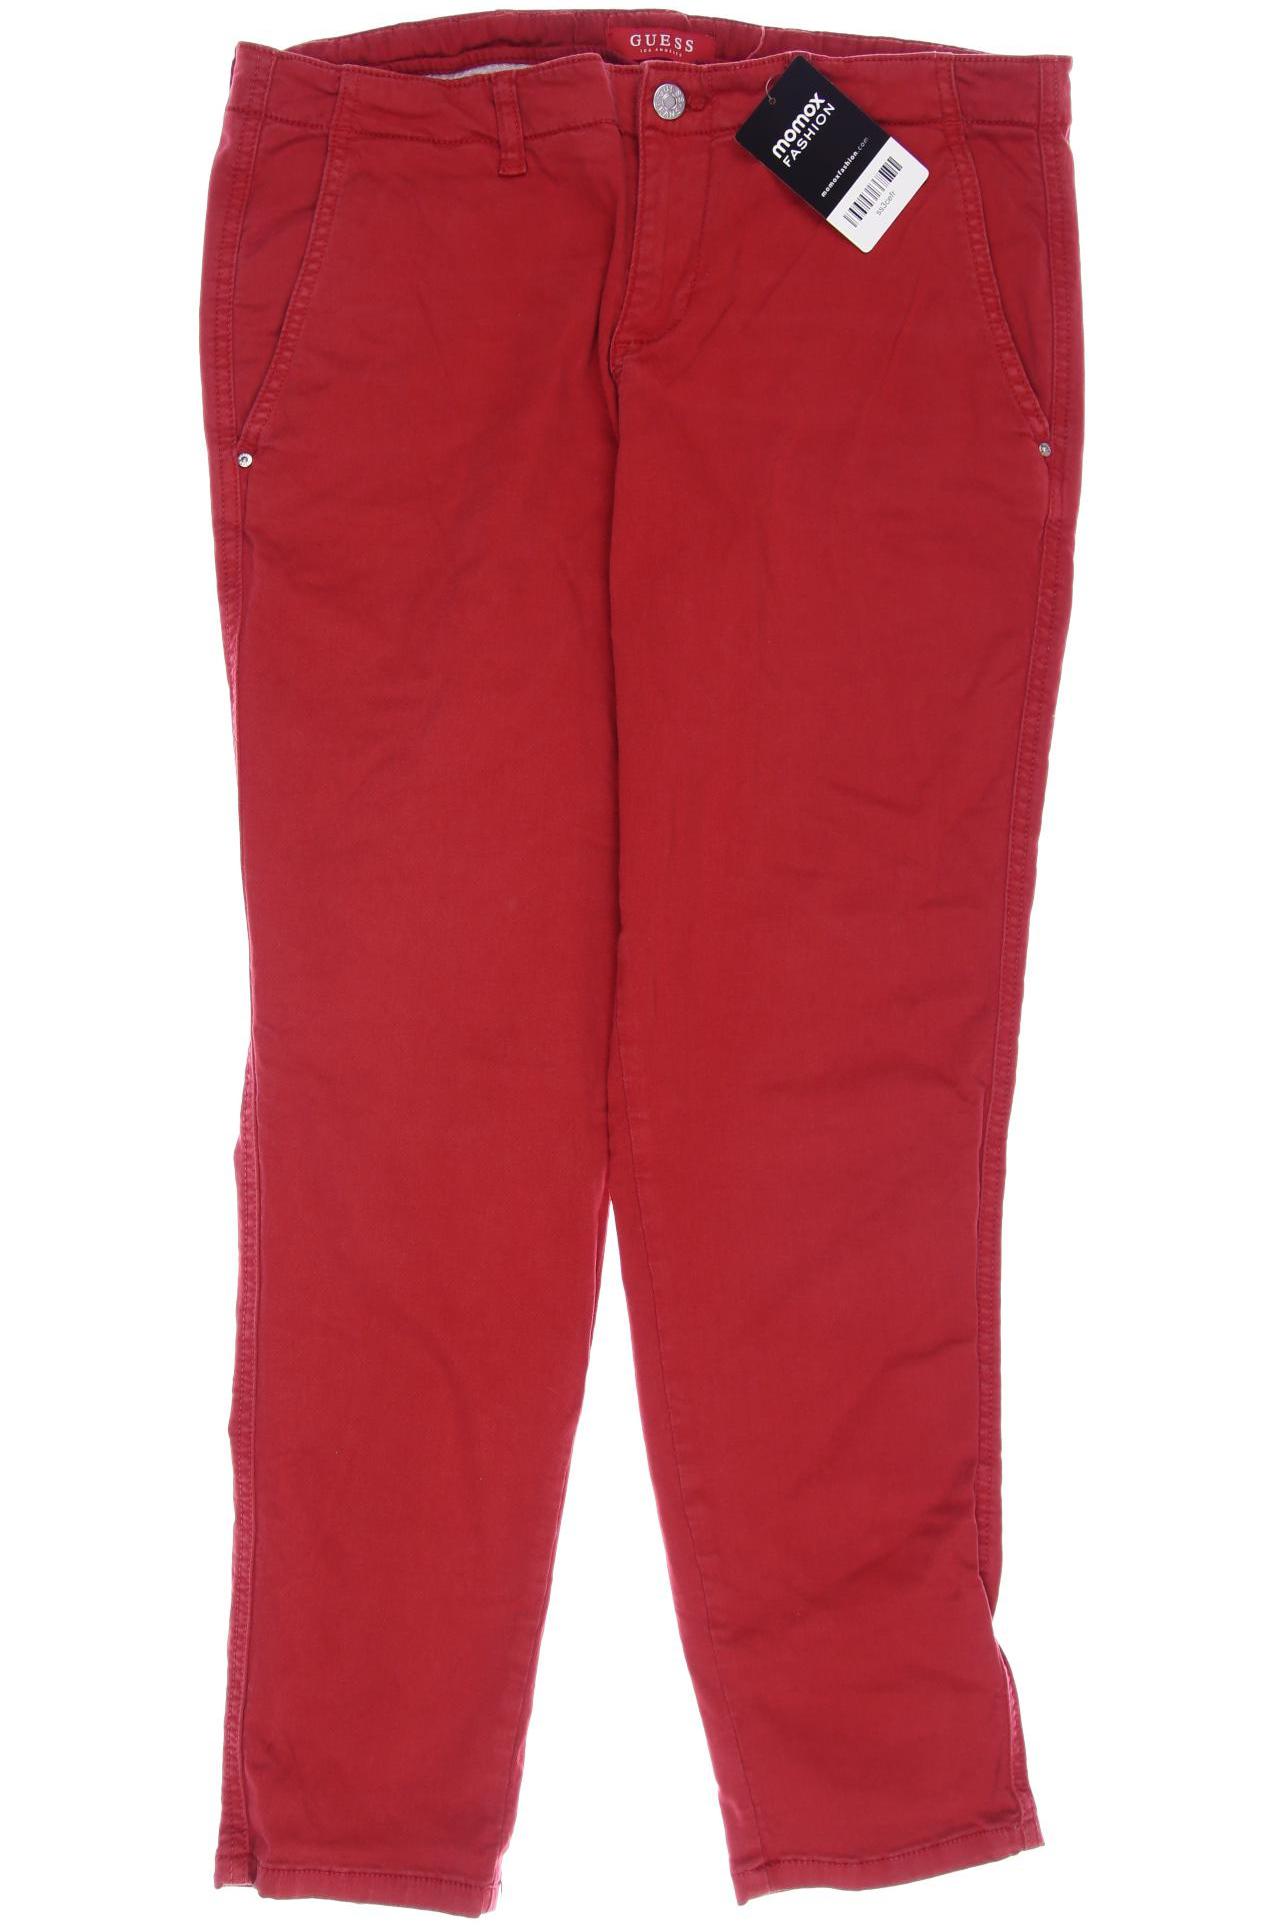 GUESS Damen Jeans, rot von Guess